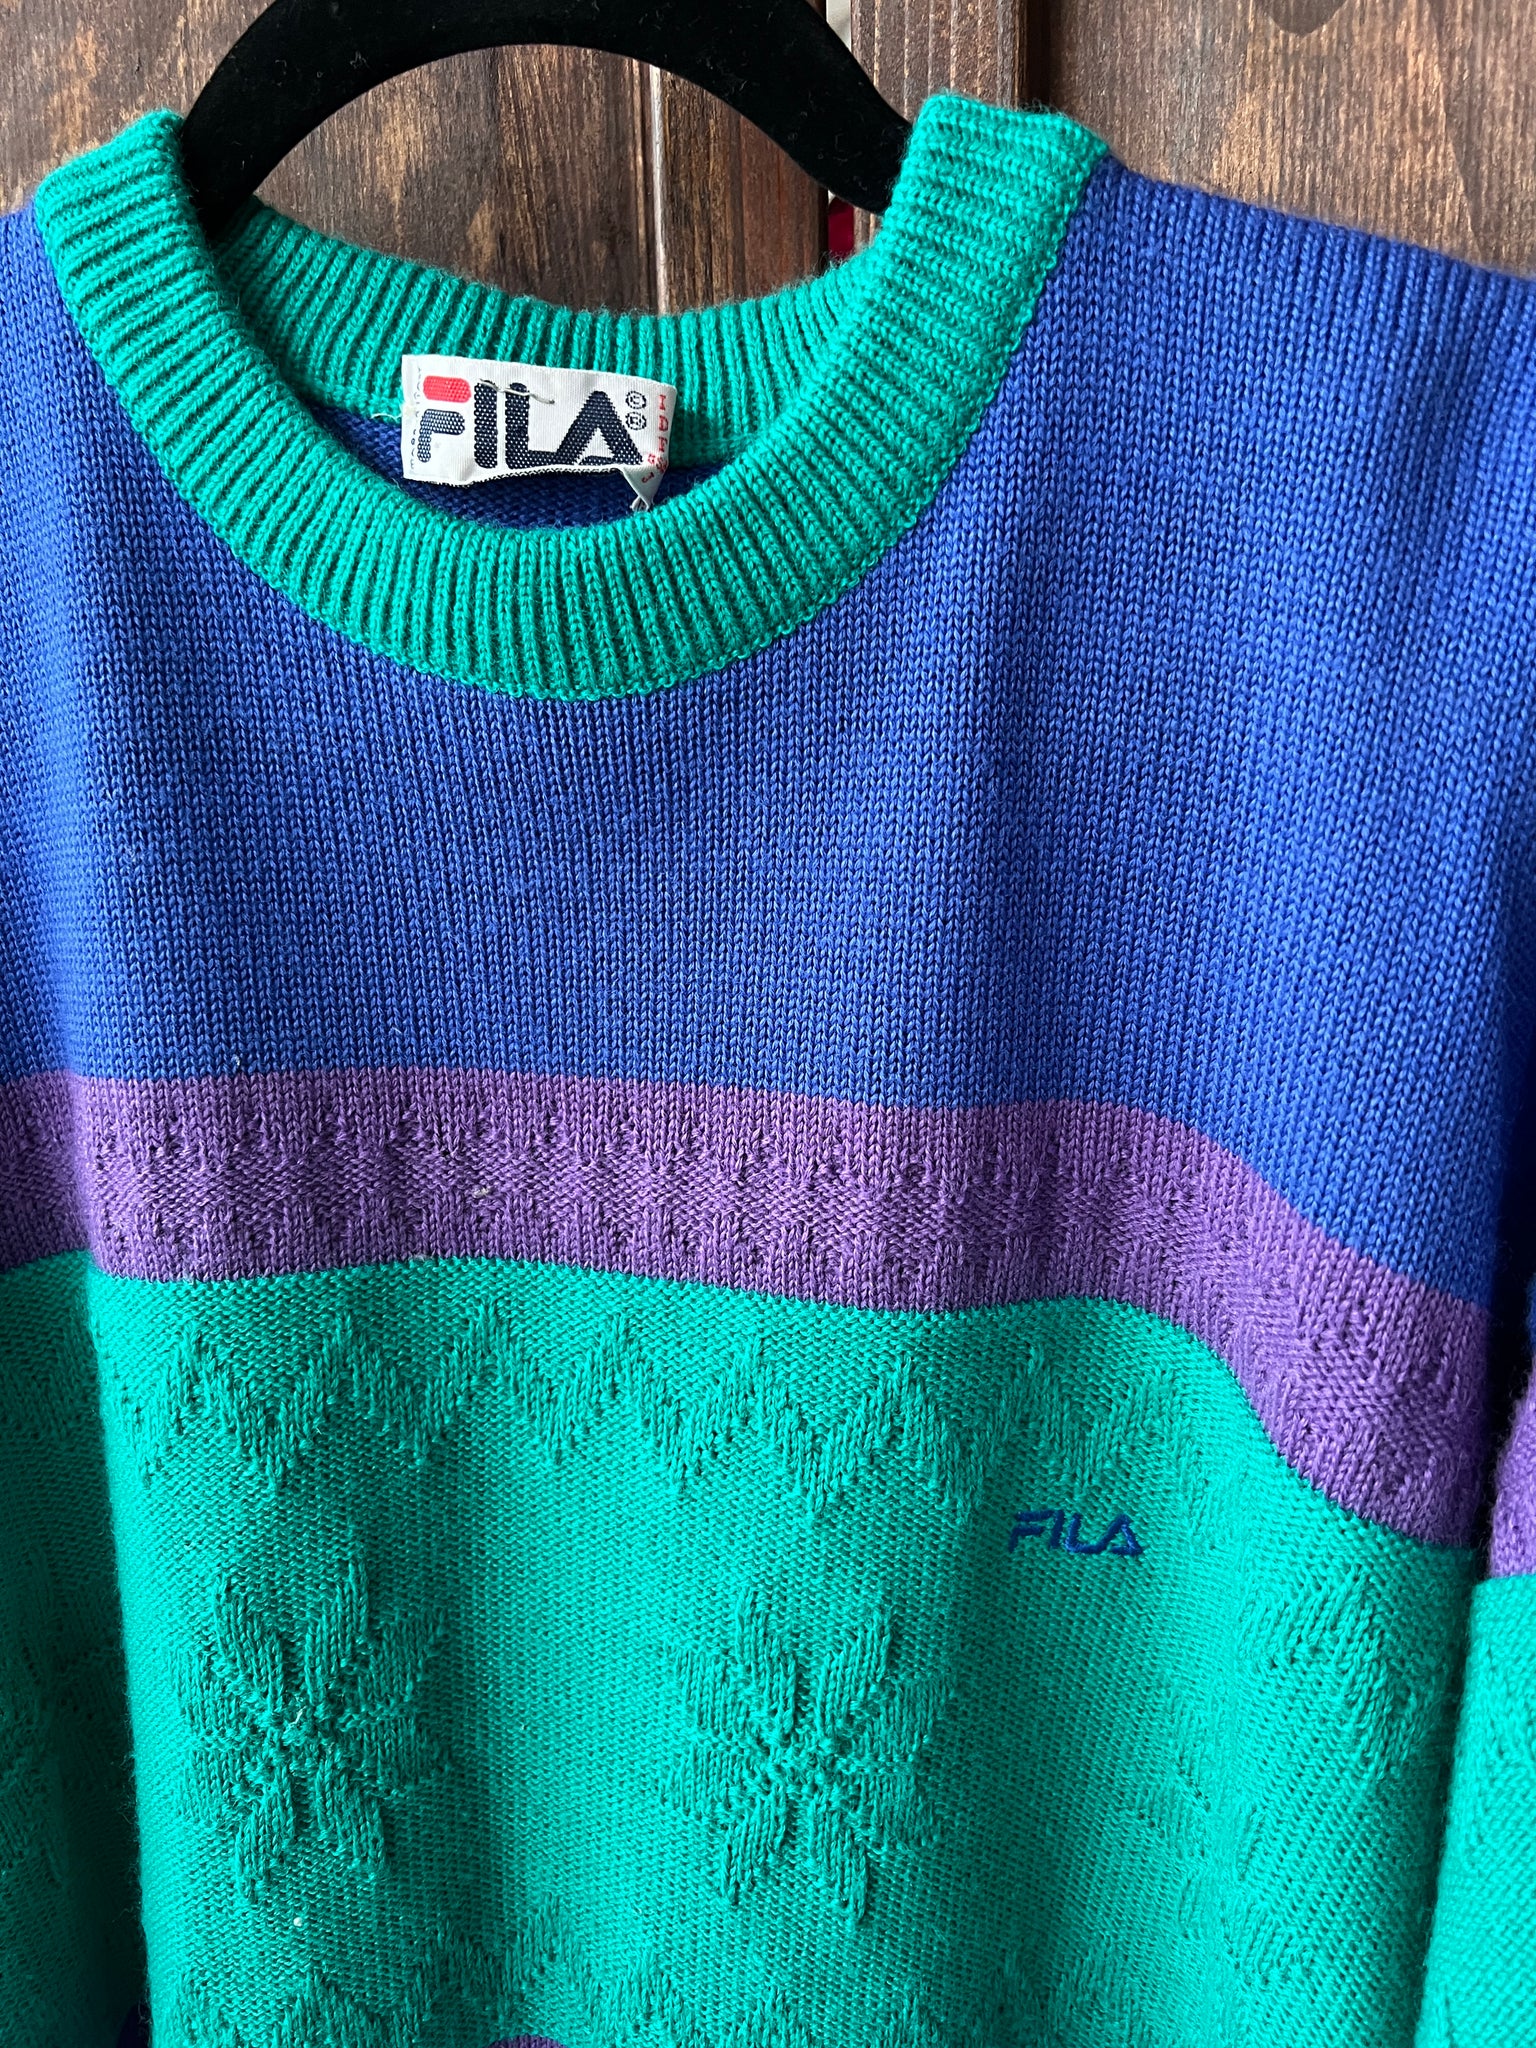 1980's MENS SWEATER- Fila blue/teal ski sweater